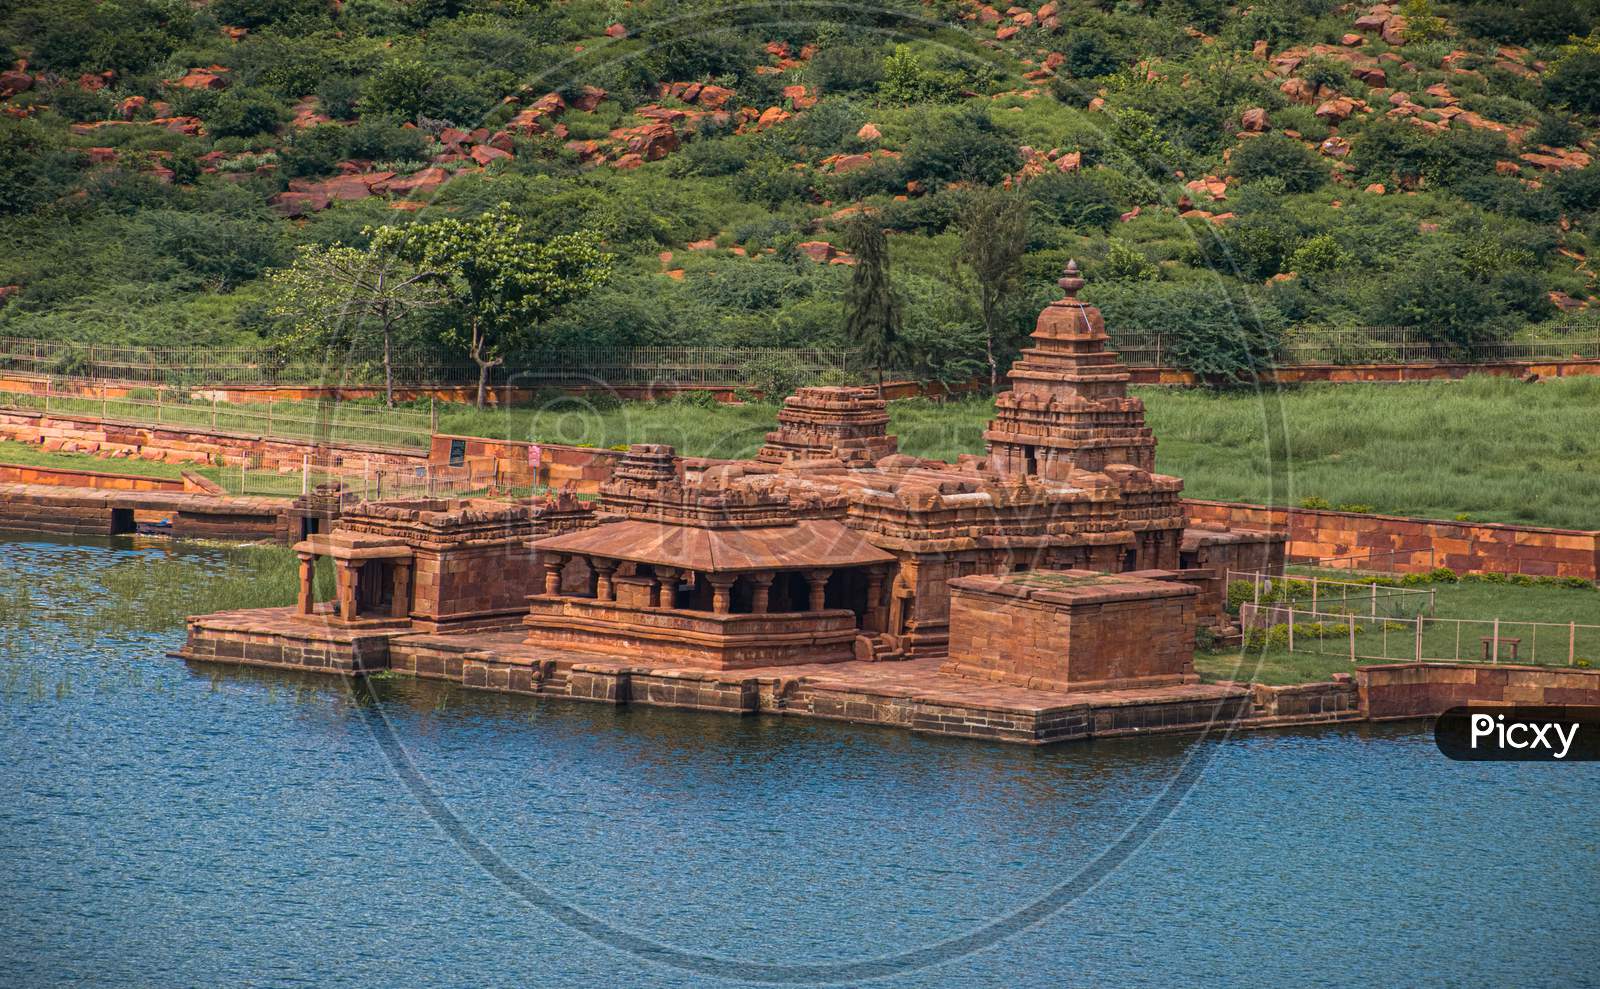 Ancient badami bhutanatha temple built on Agastya lake around 1000 years ago.